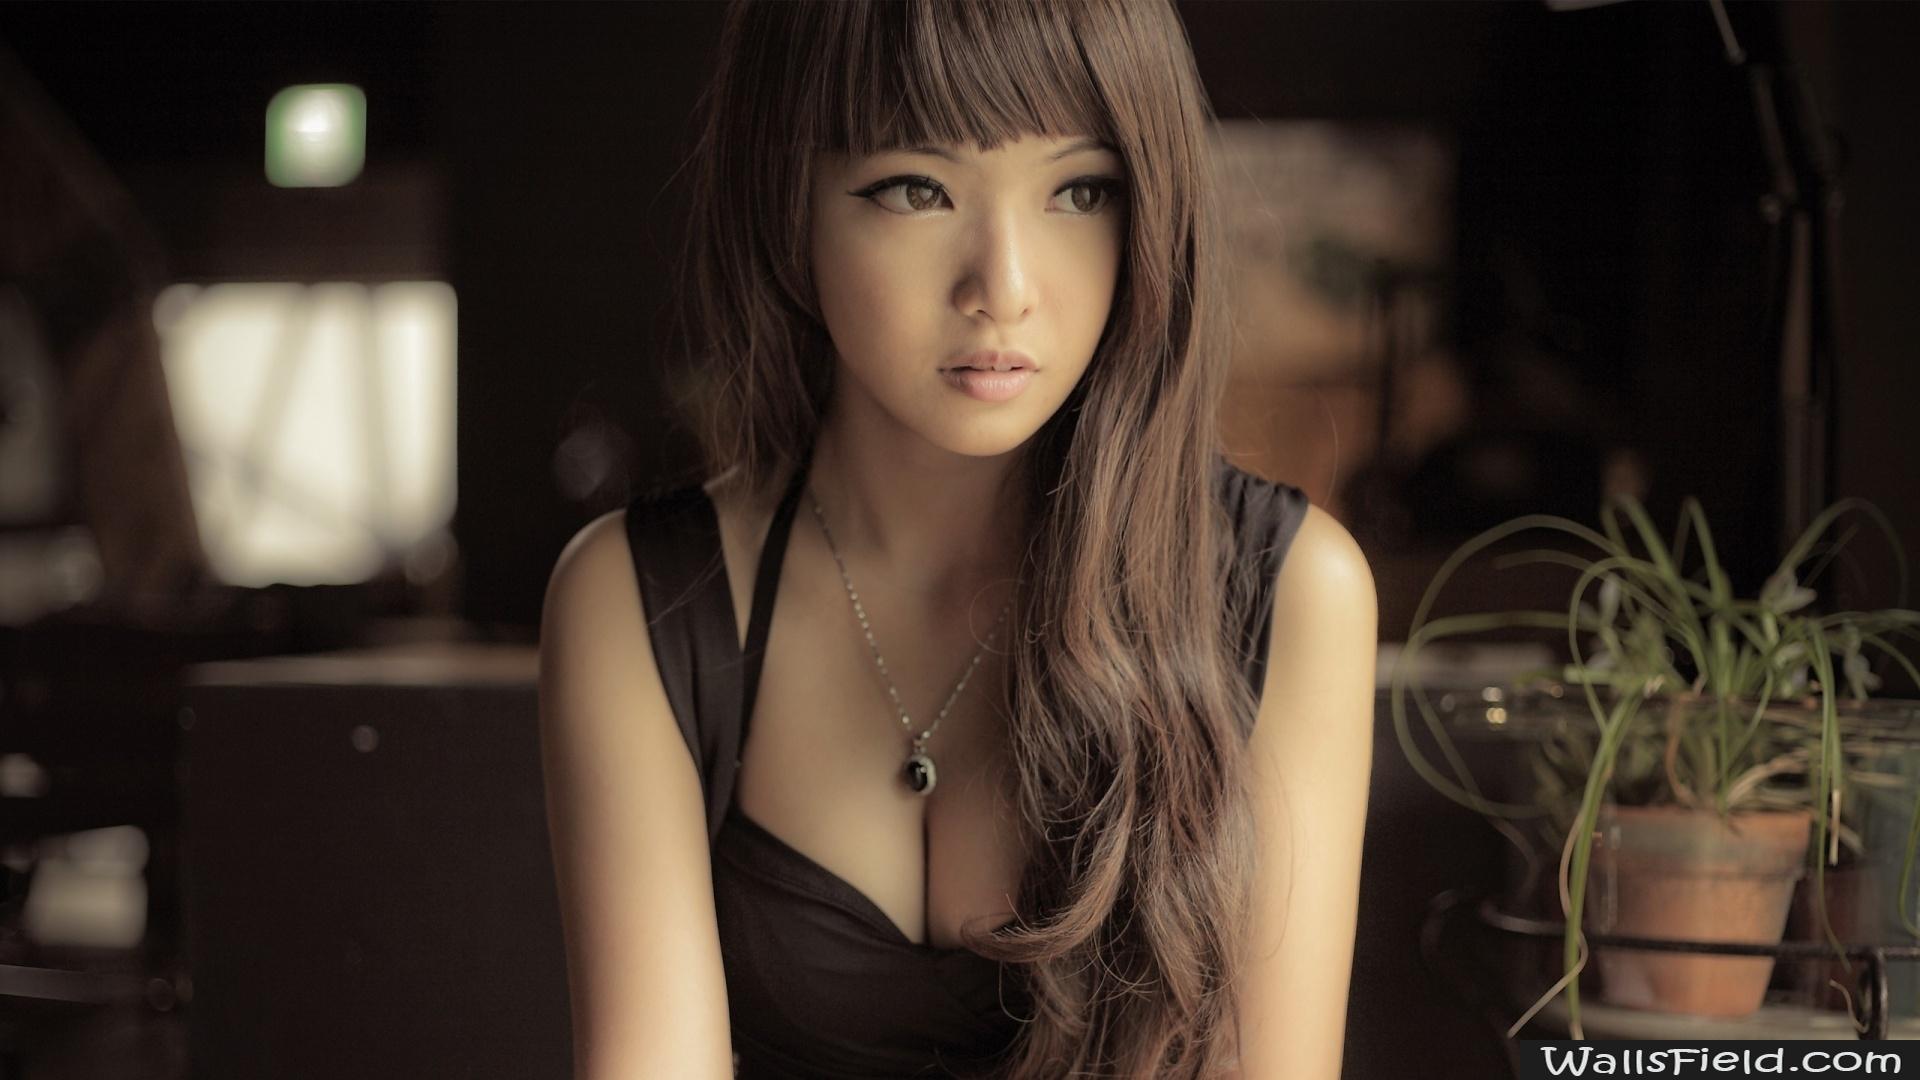 Beautiful Asian Girl.com. Free HD Wallpaper